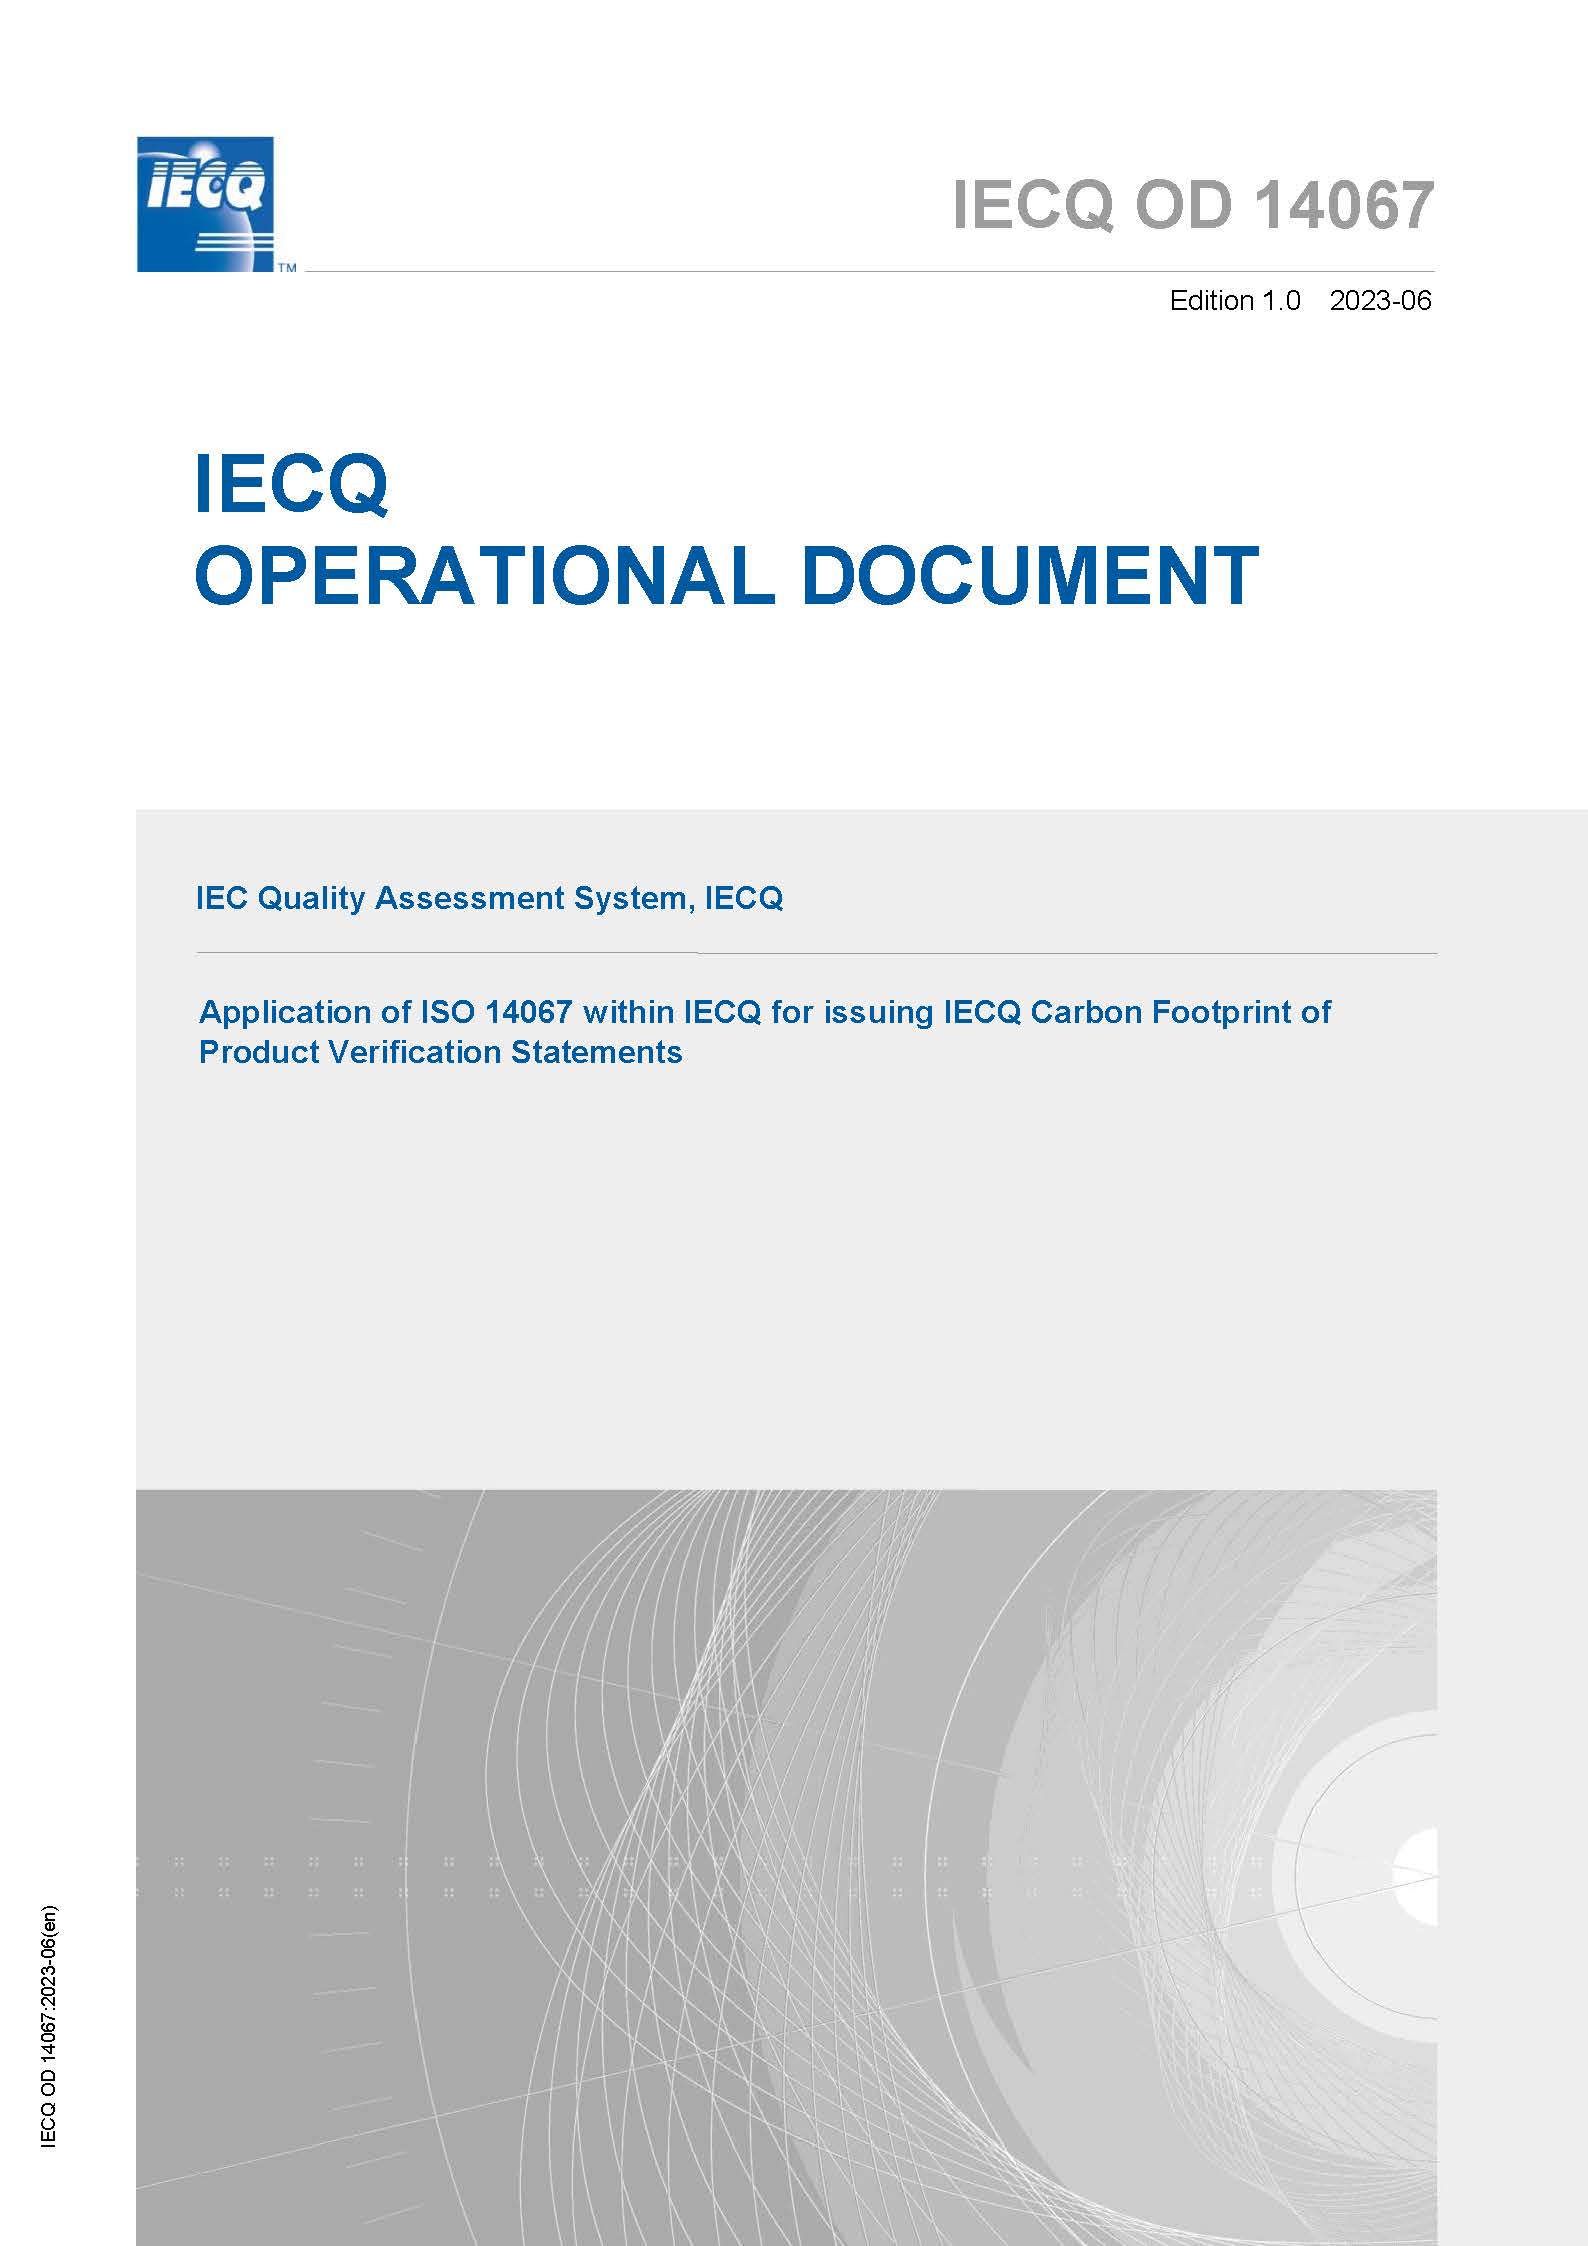 IECQ Rules of Procedure - Part 2: IECQ Approved Process Scheme